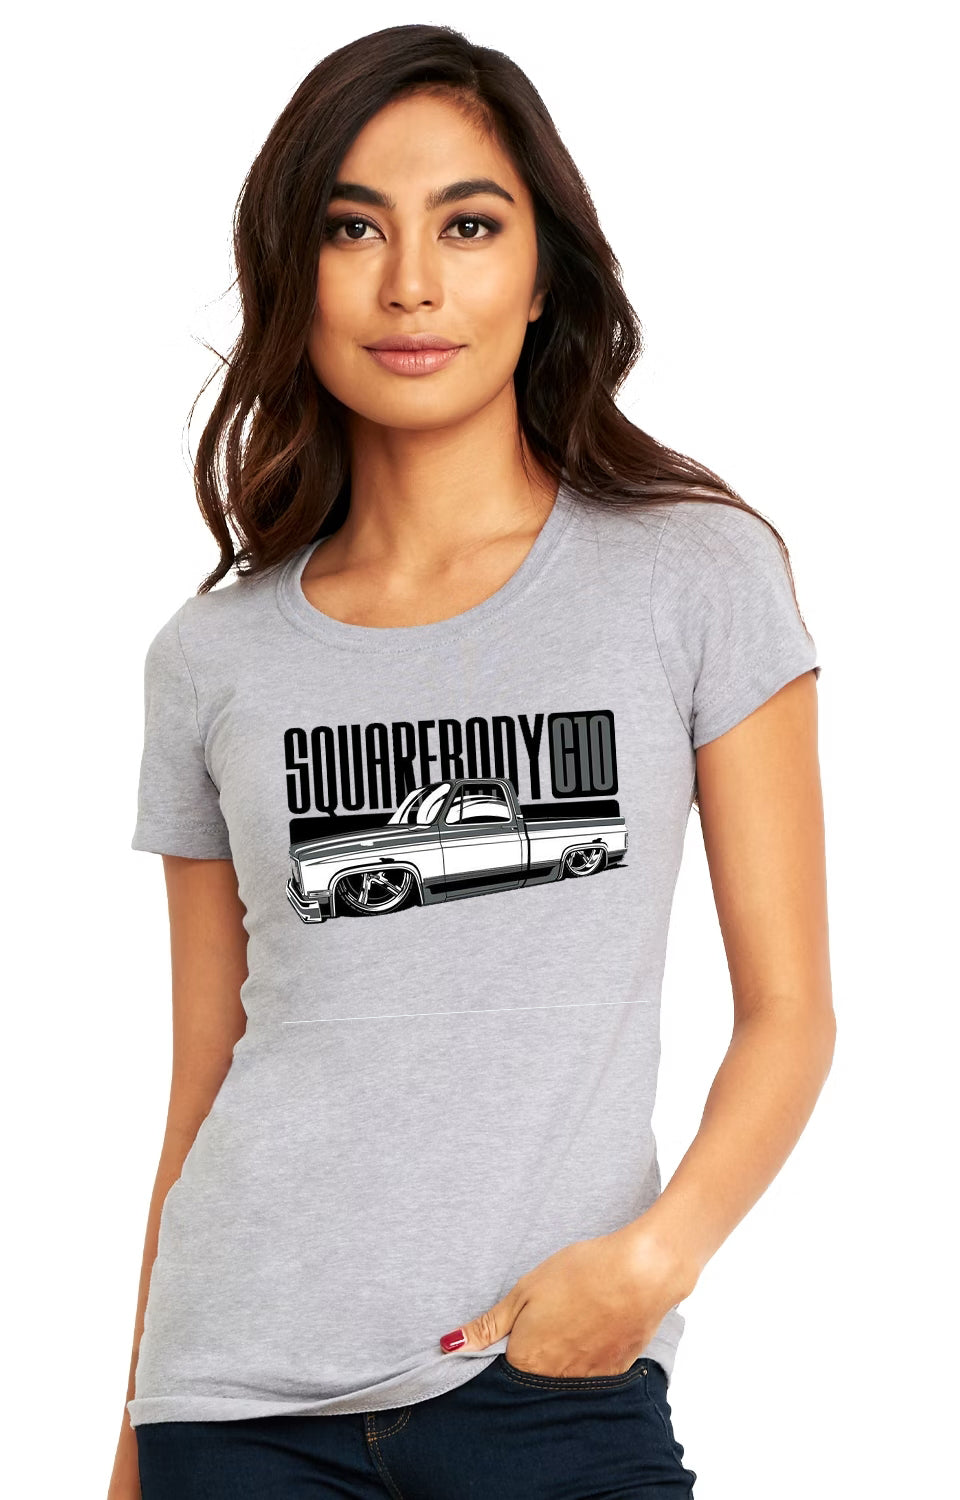 Squarebody C10 Shirt